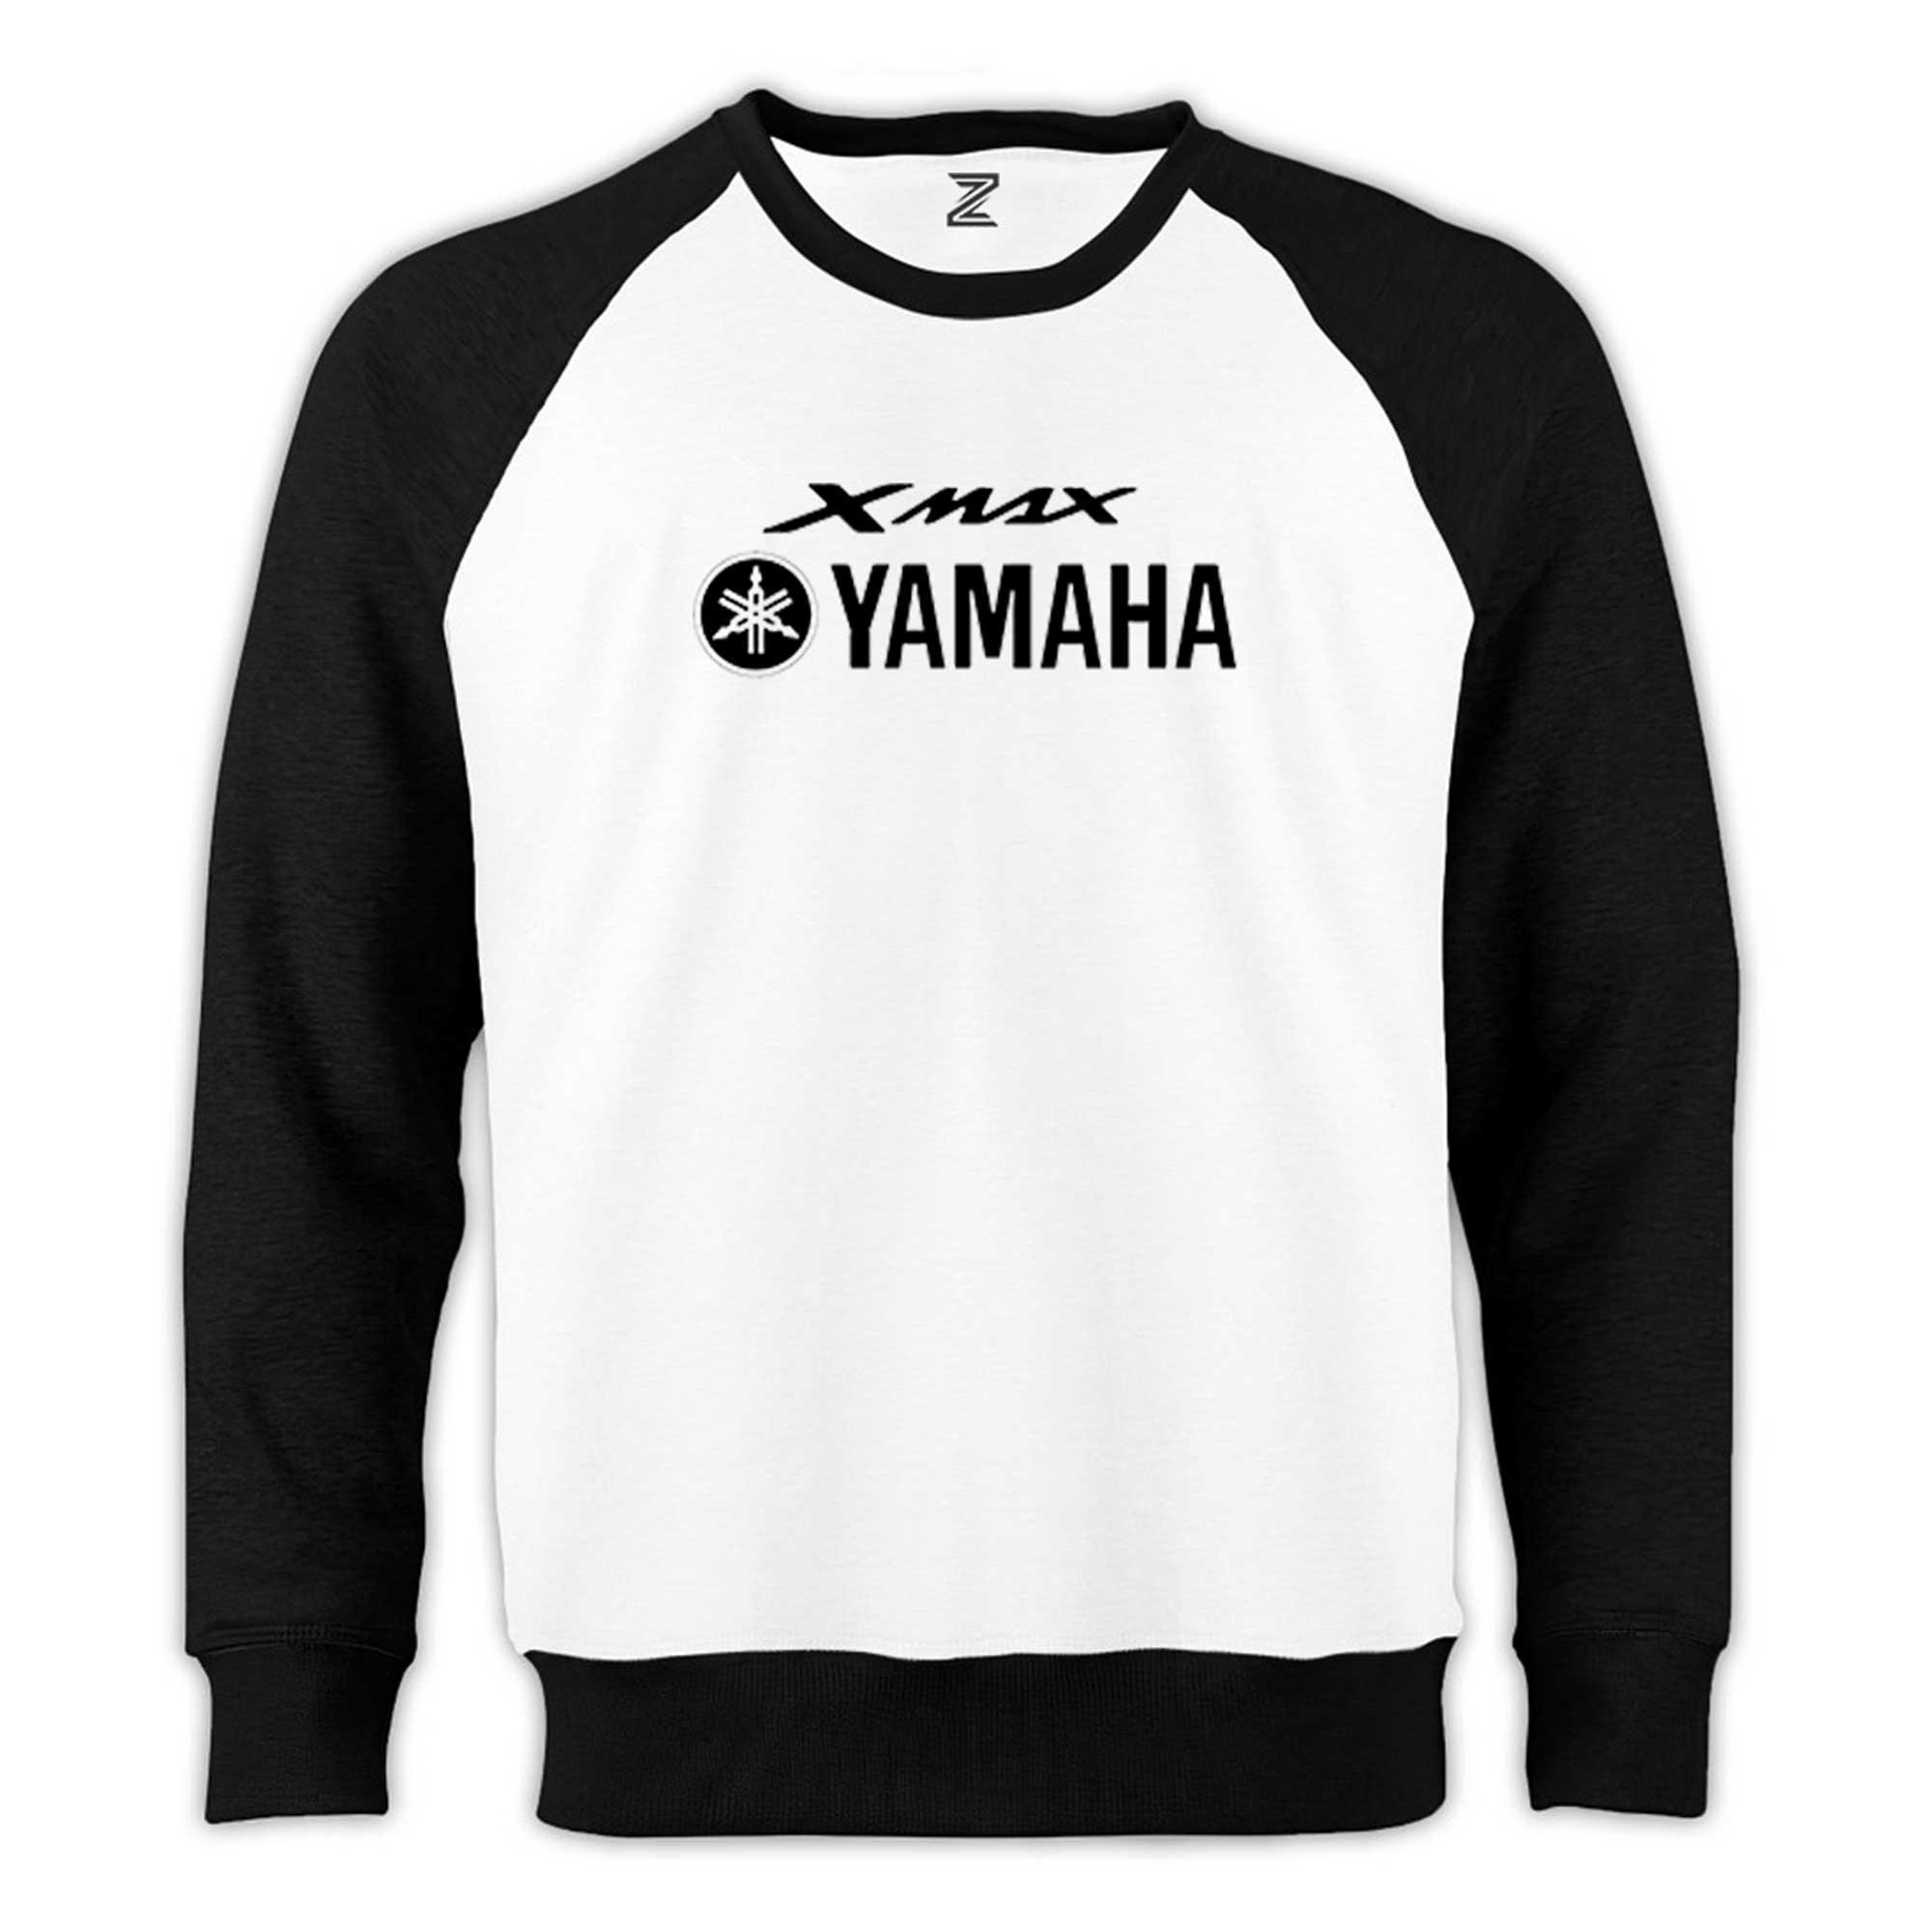 Yamaha Xmax Text Reglan Kol Beyaz Sweatshirt - Zepplingiyim